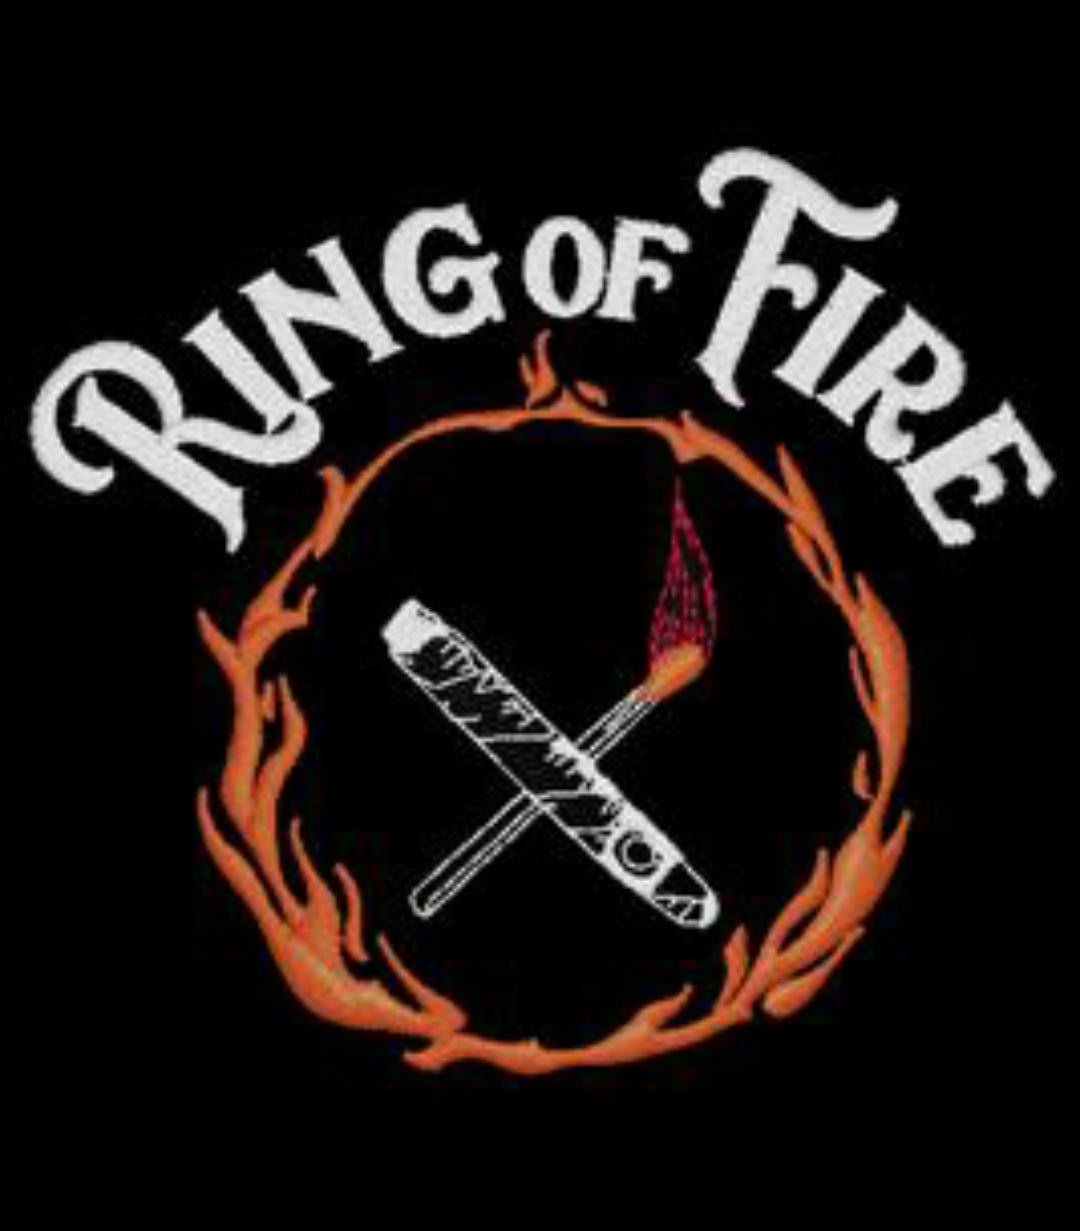 Trademark Logo RING OF FIRE